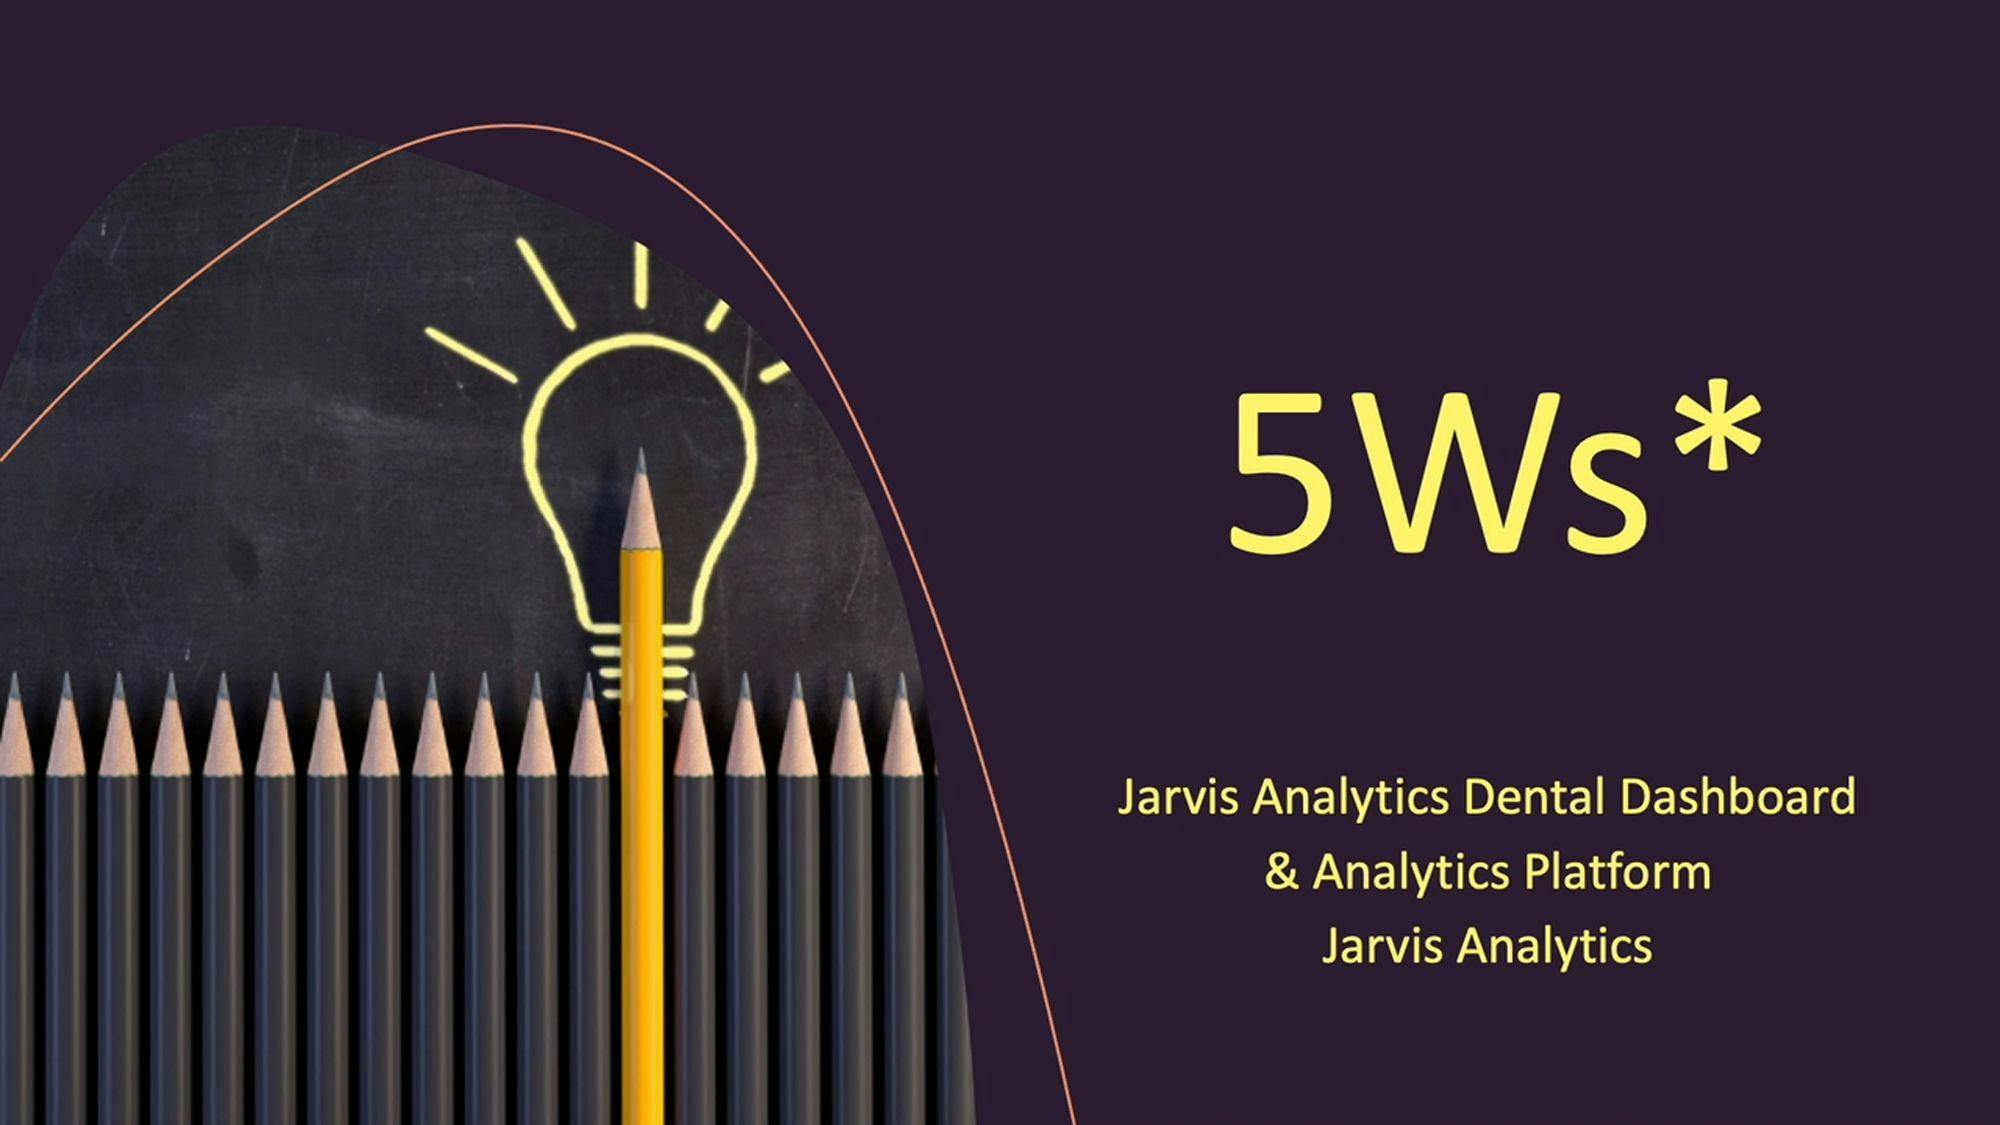 5Ws* Video - Jarvis Analytics